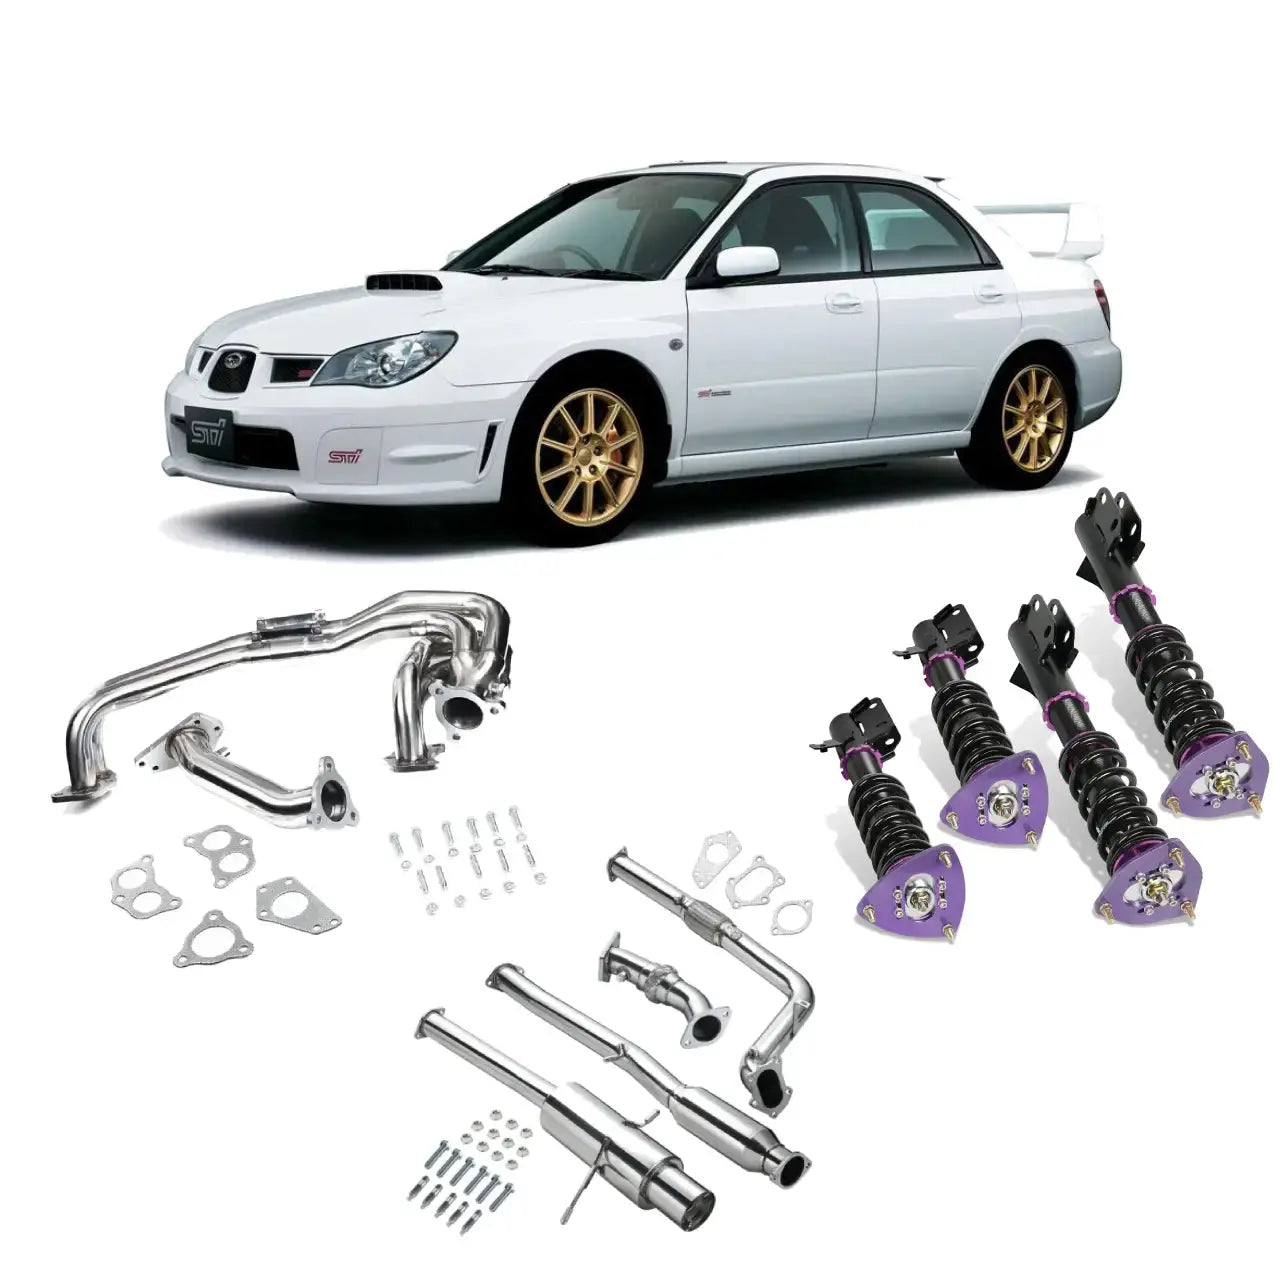 Exhaust Header/Catback w/ Downpipe Up-pipe All-In-One Kit for 2002-2006 Subaru Impreza WRX/STI Flashark